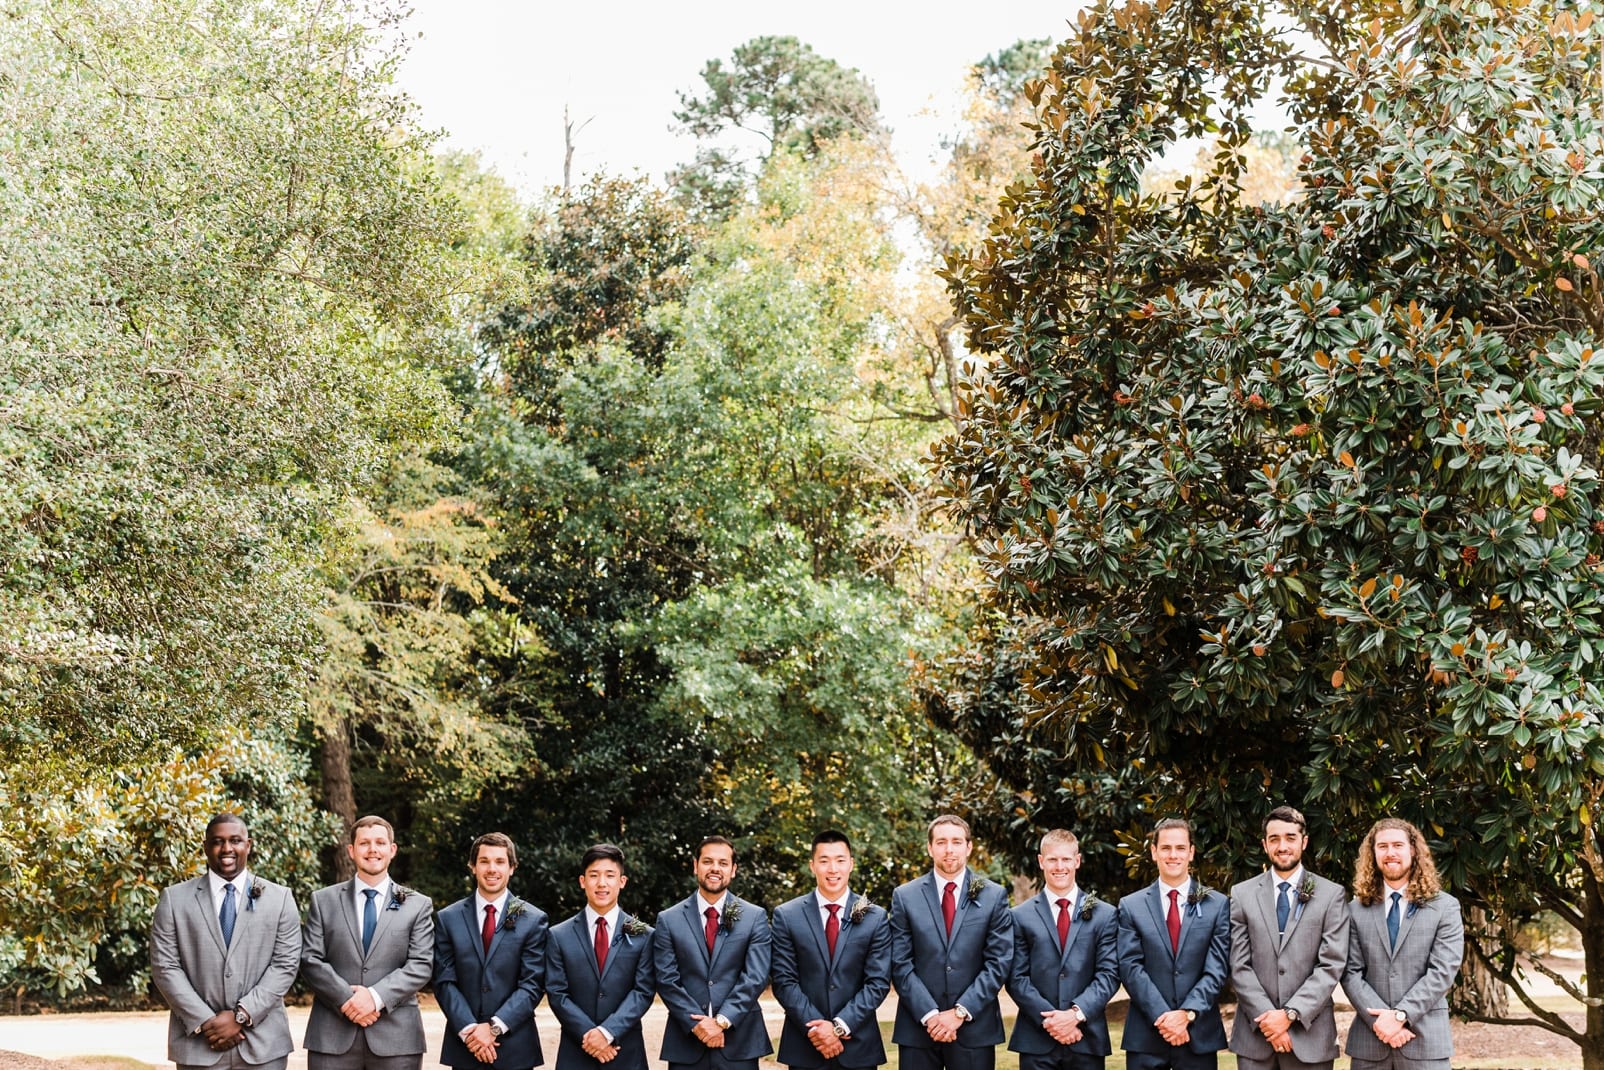 sutherland estate wedding photographer navy and burgundy wedding groomsmen in navy burgundy tie photo